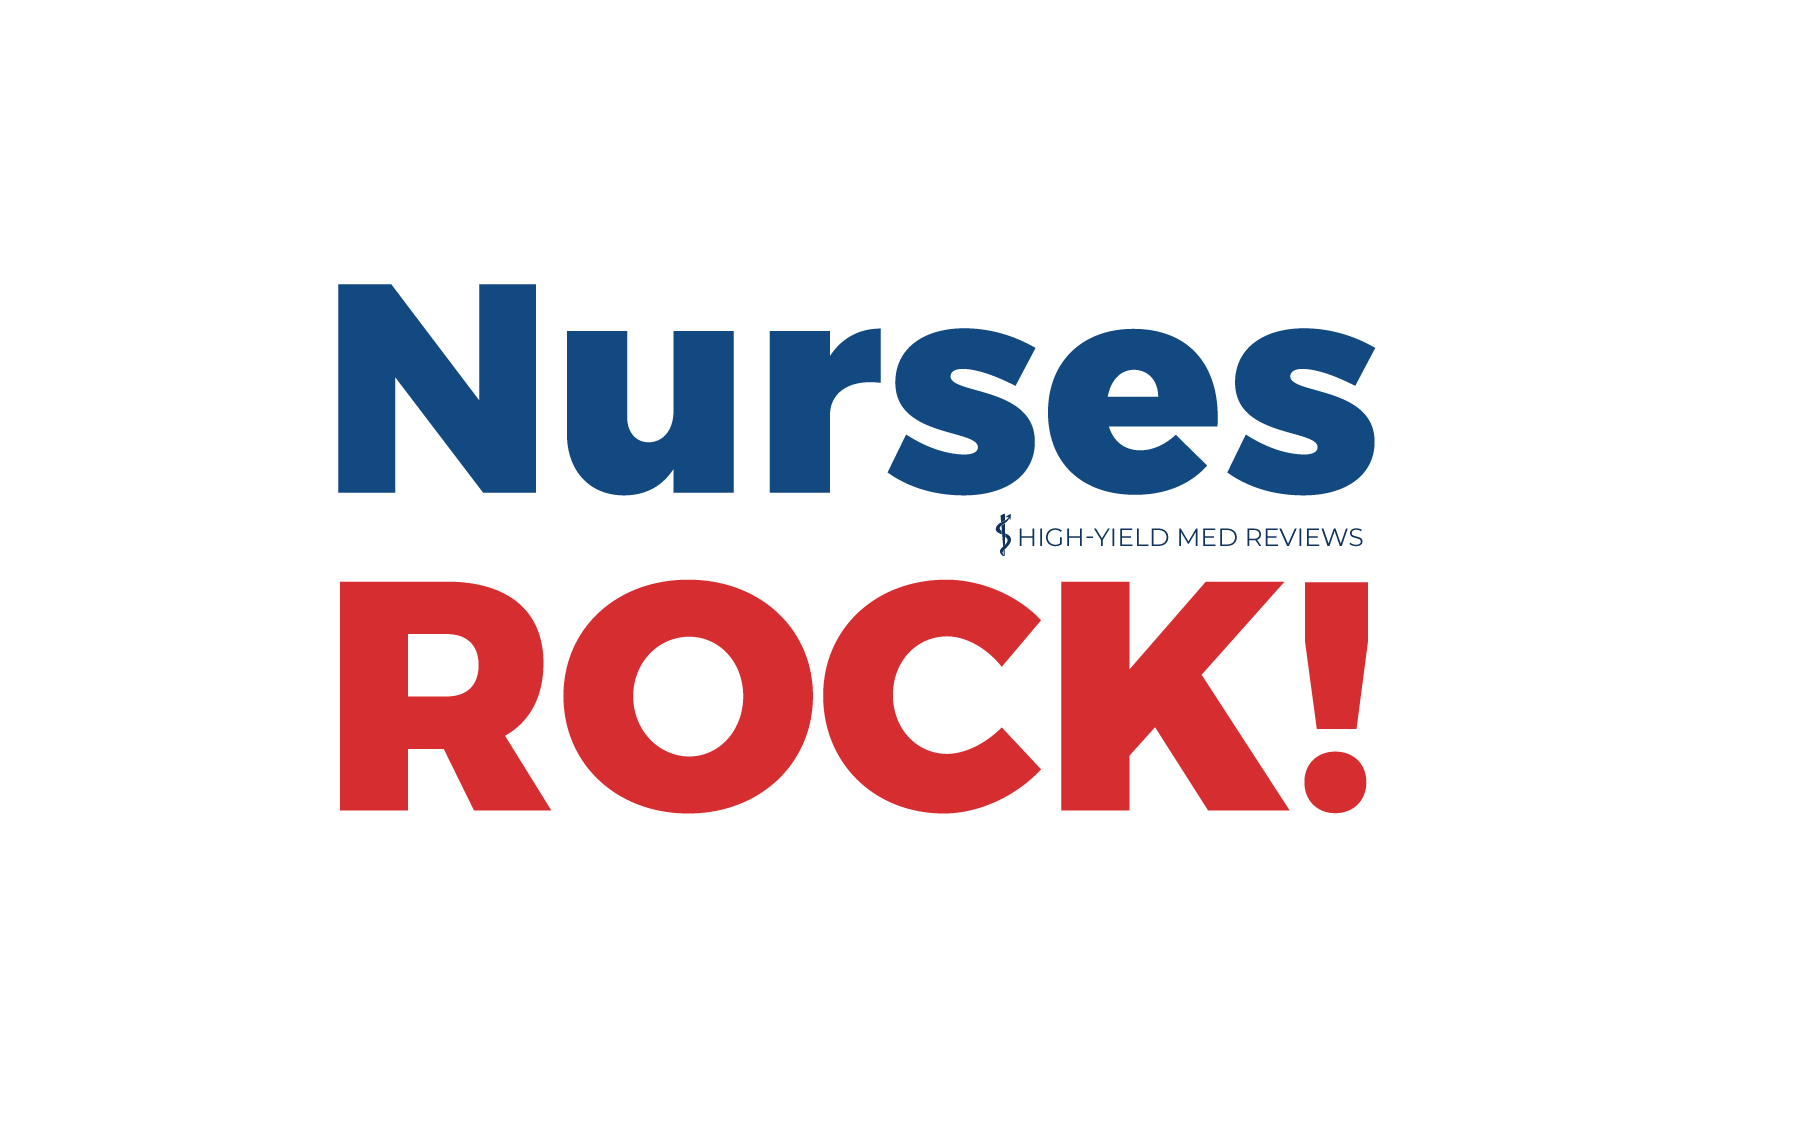 Nurses Rock red/blue text